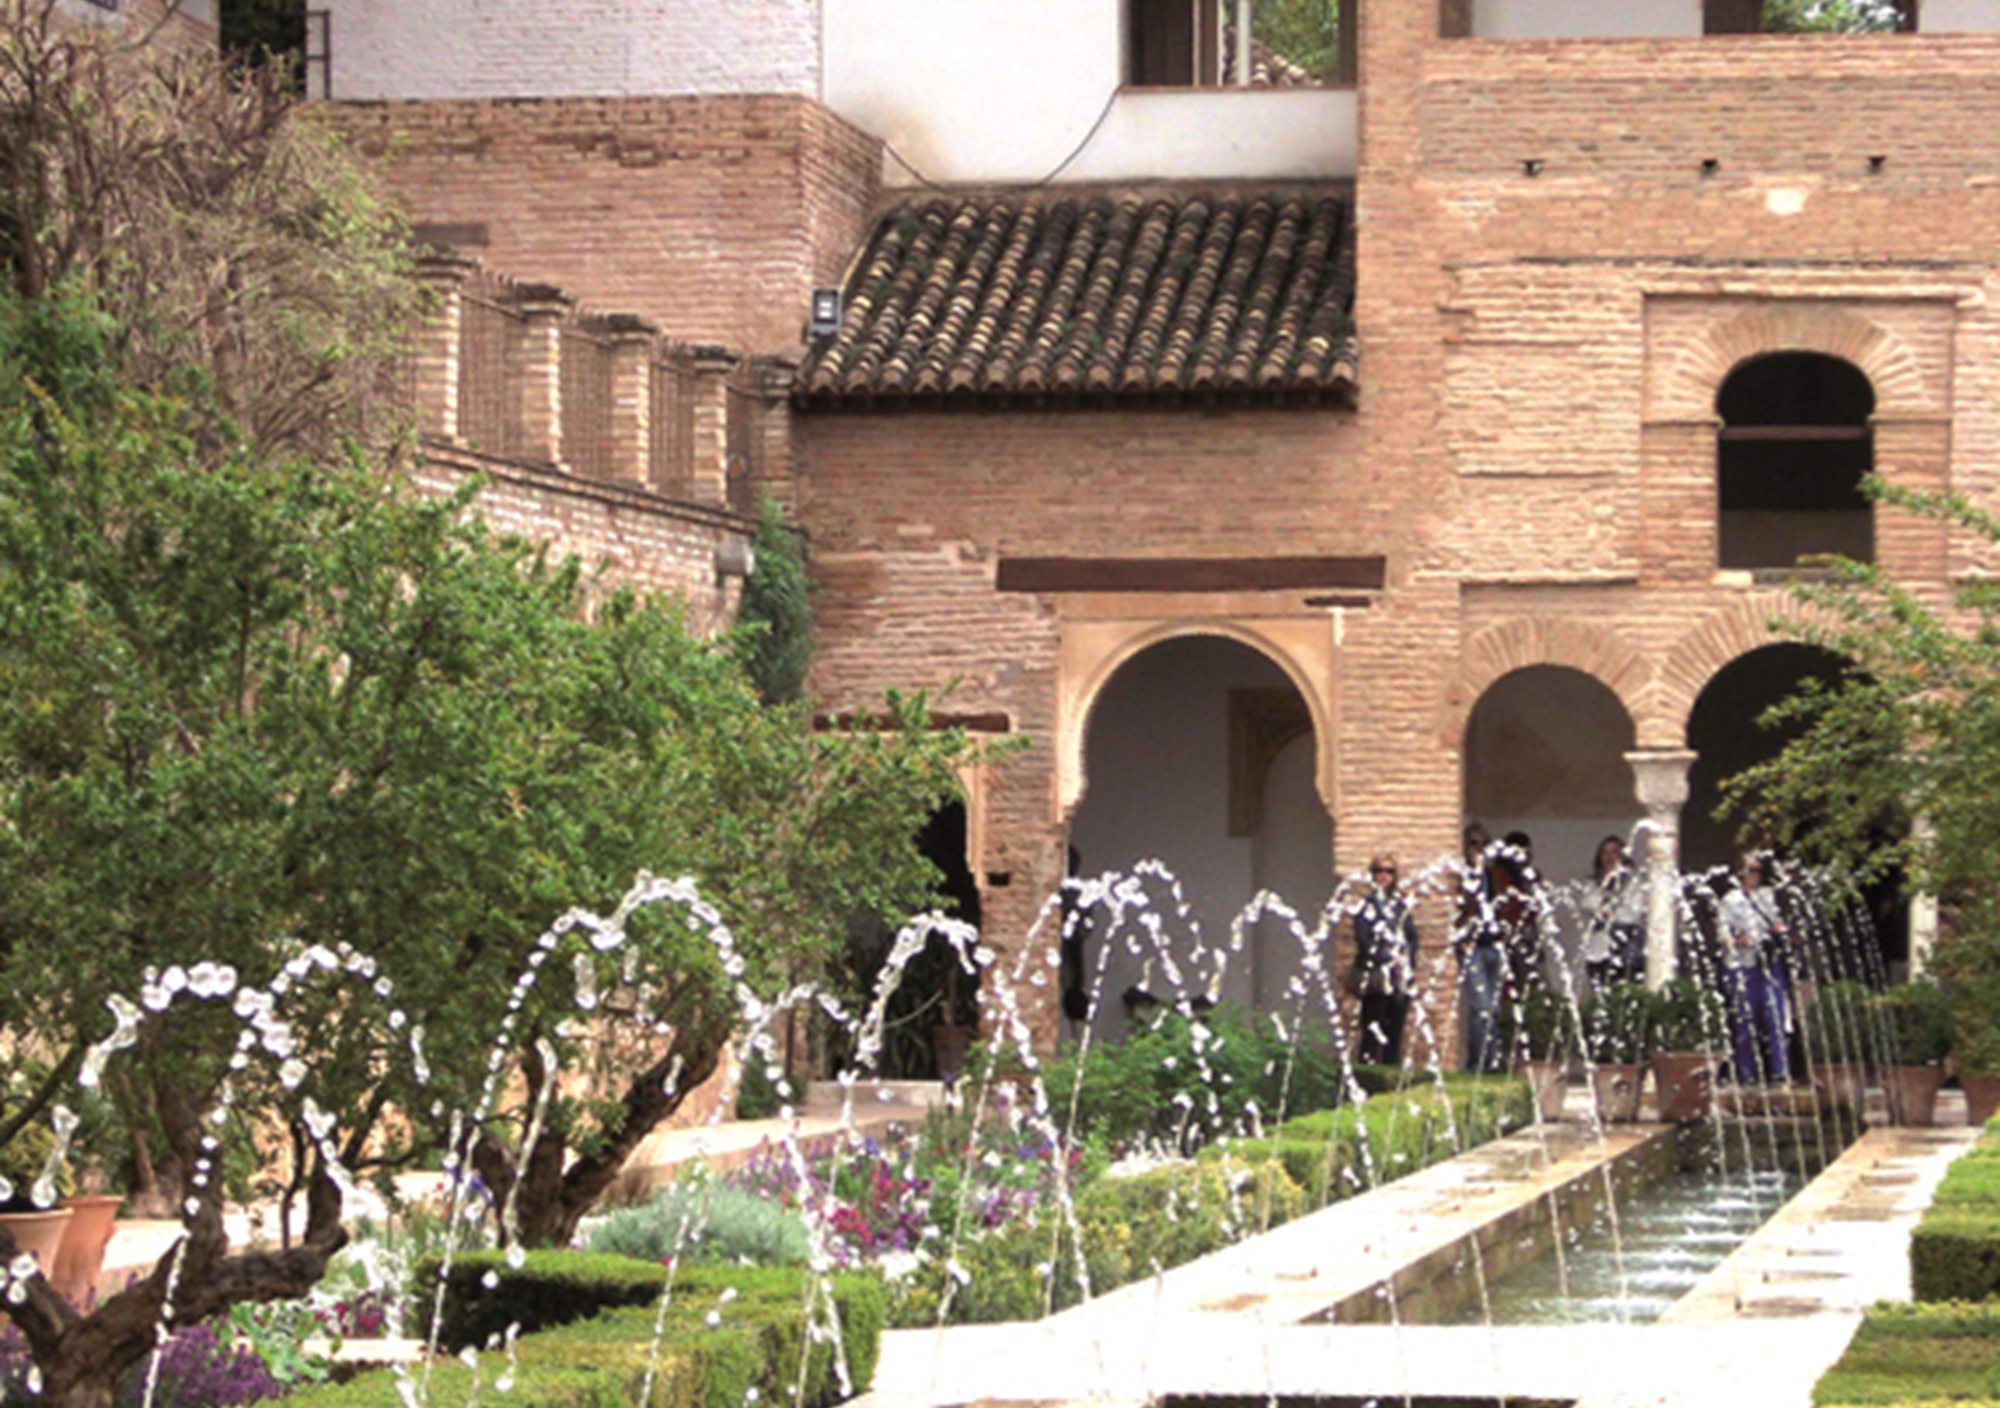 acheter reserver Visite guidée de l'Alhambra